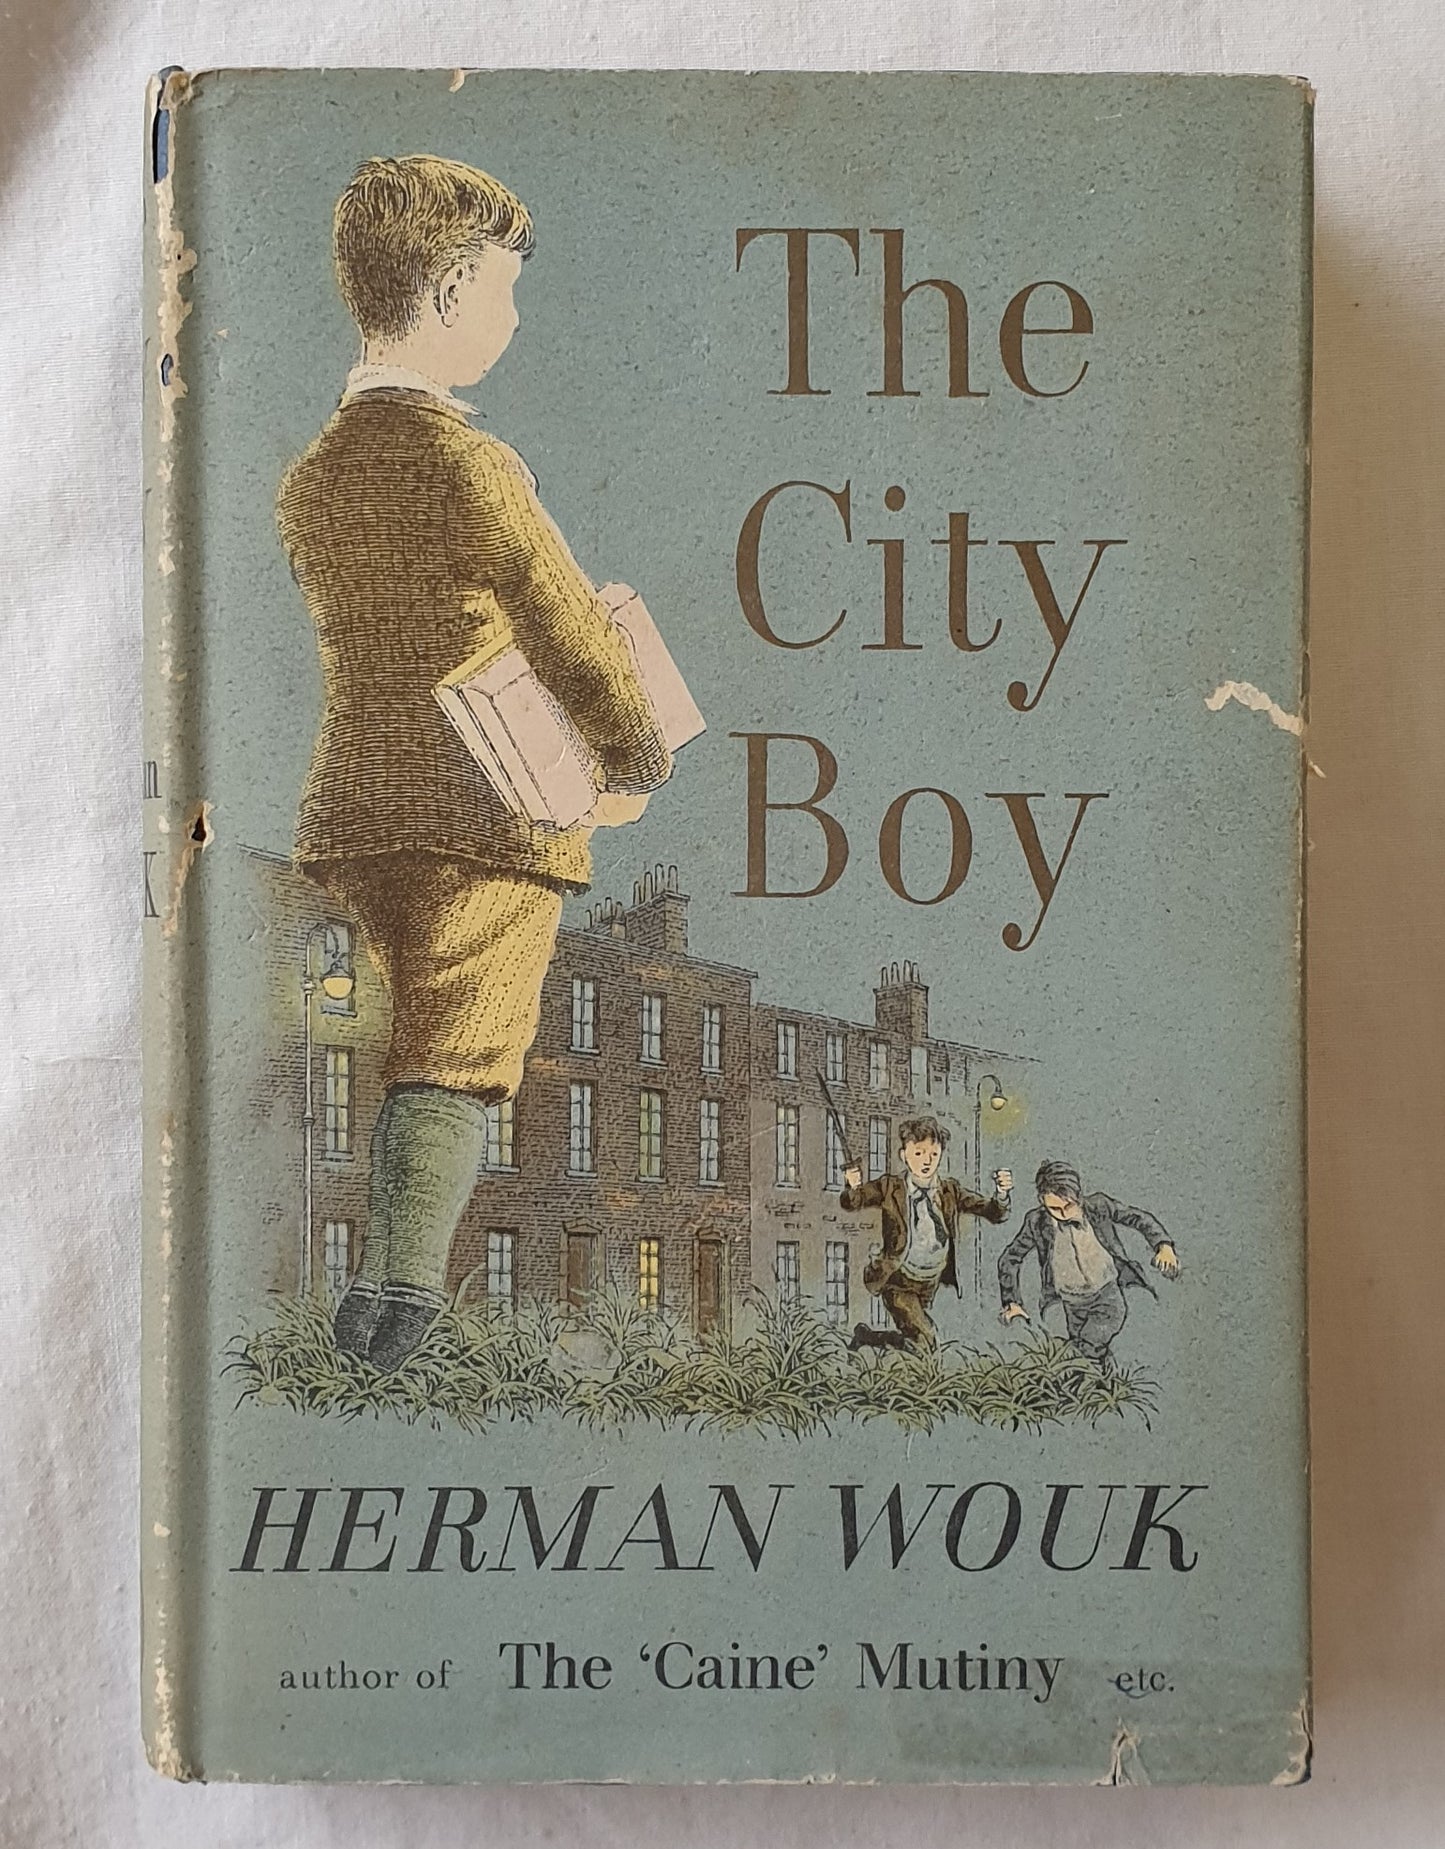 The City Boy by Herman Wouk